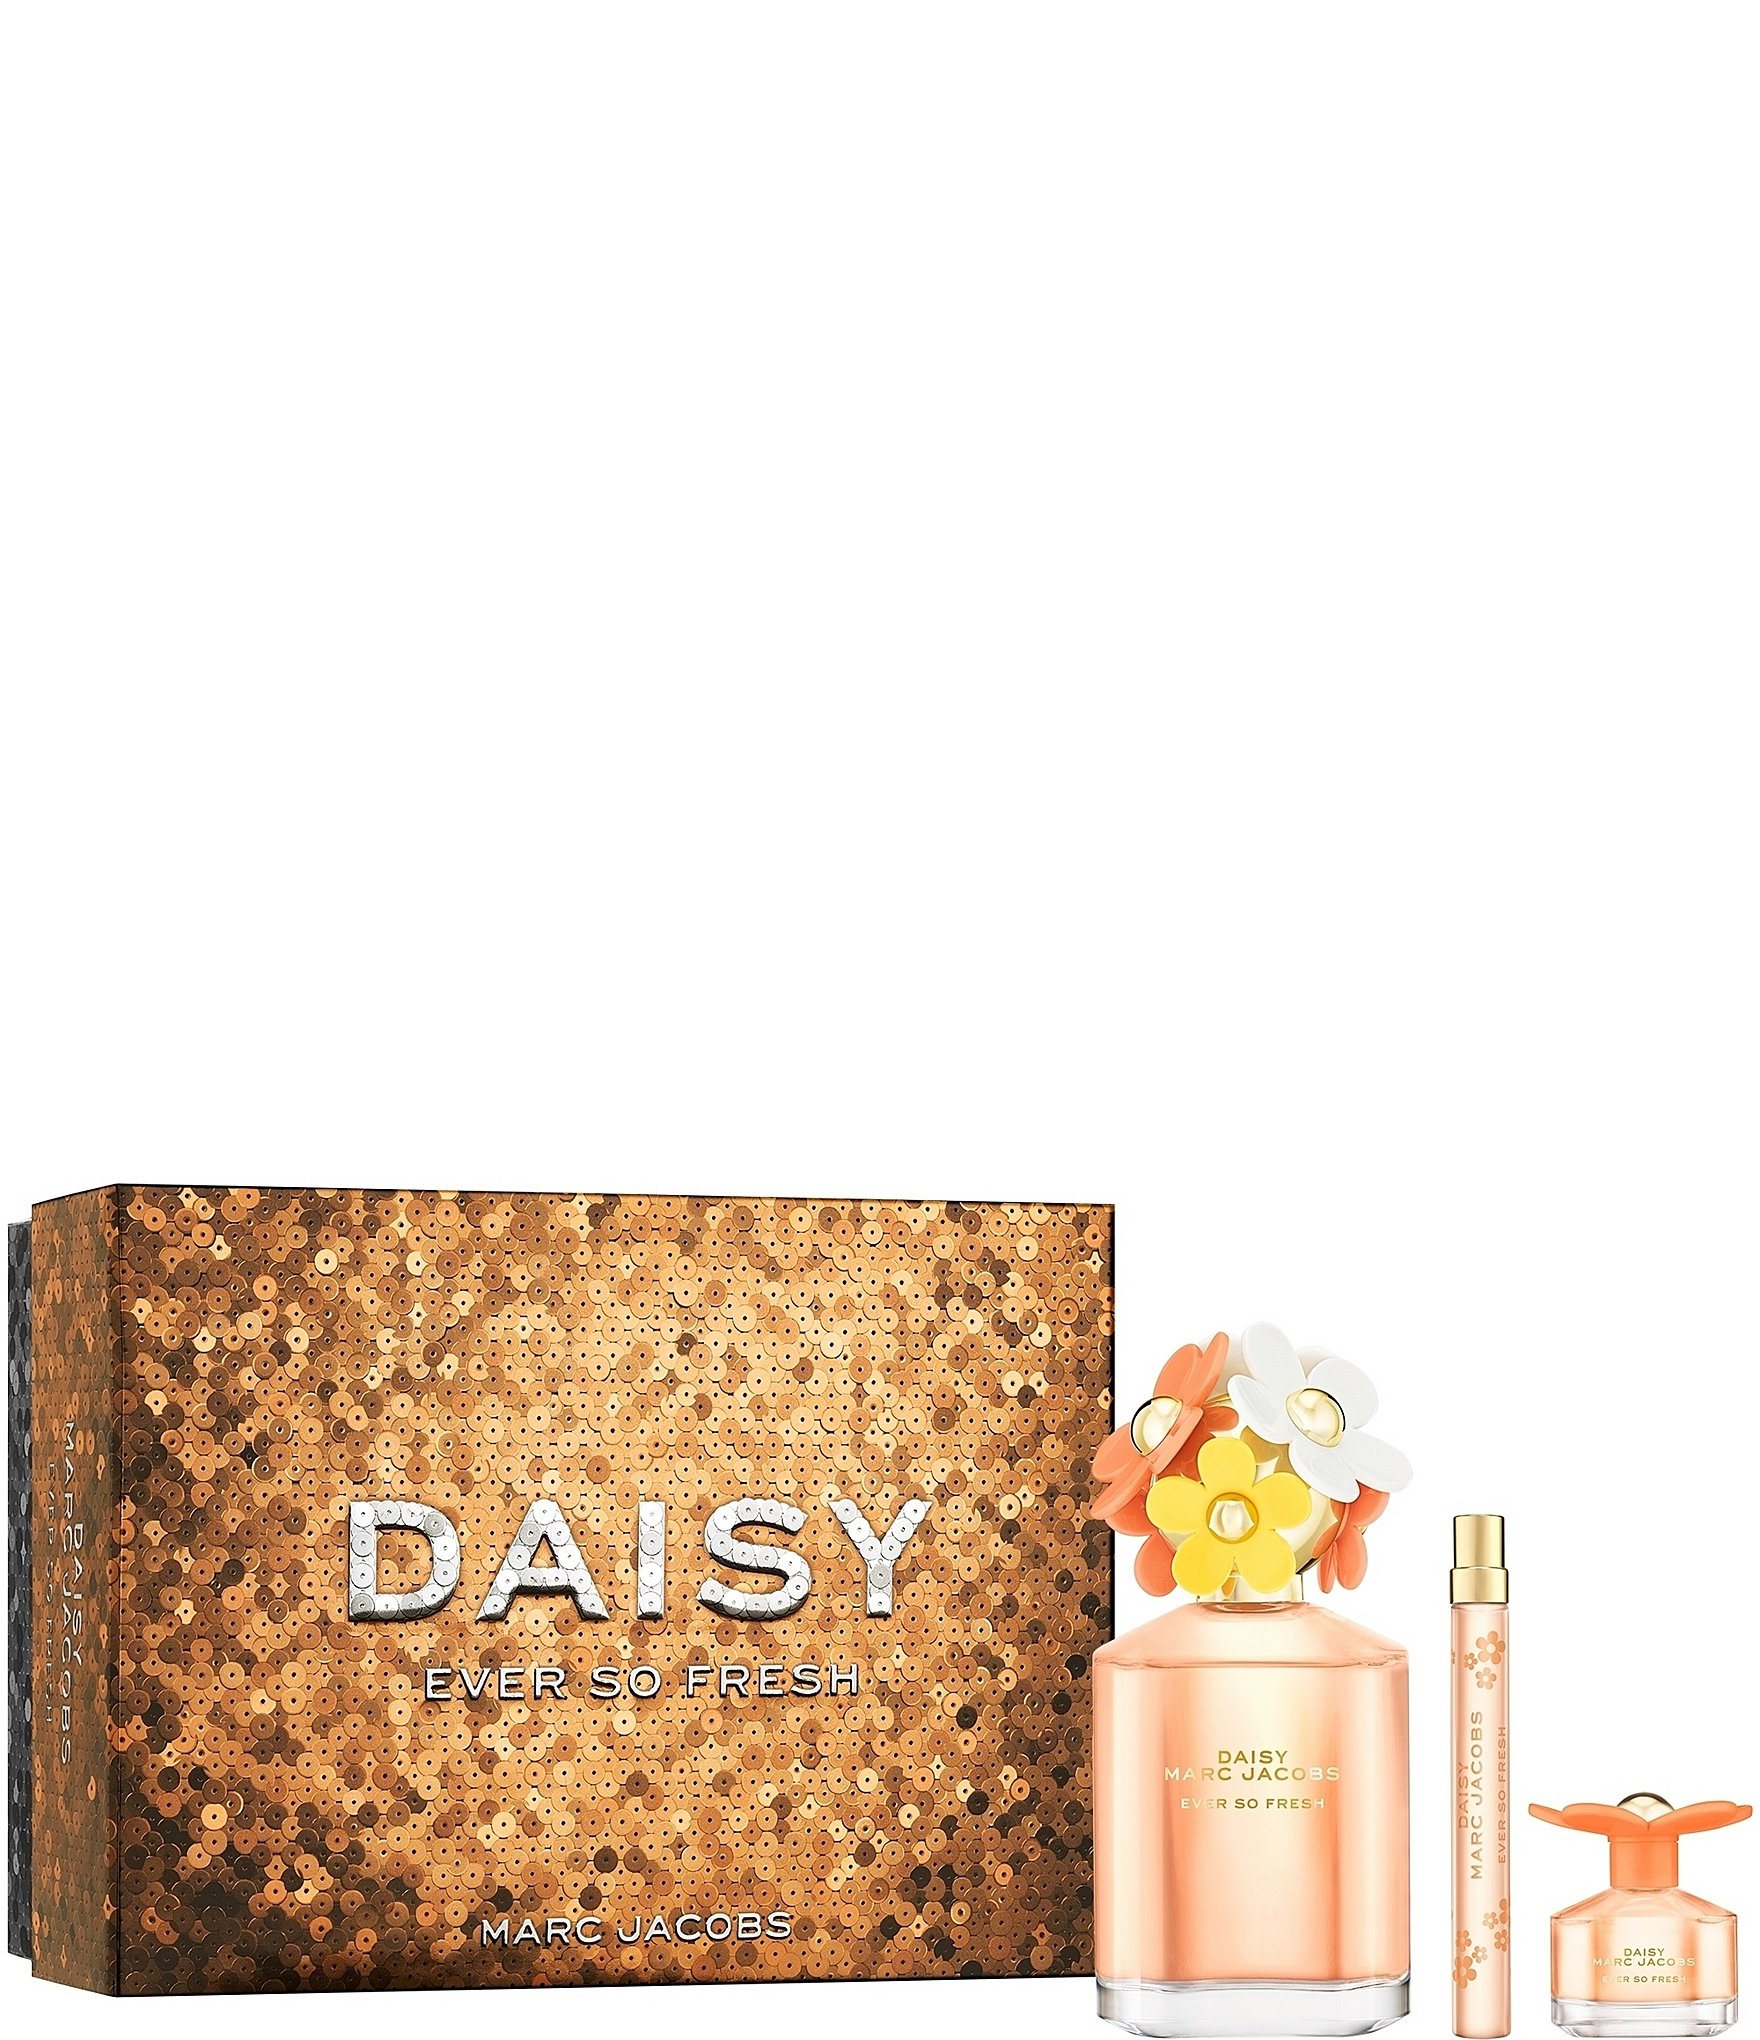 Marc Jacobs Daisy Ever So Fresh Eau de Parfum Fragrance Collection